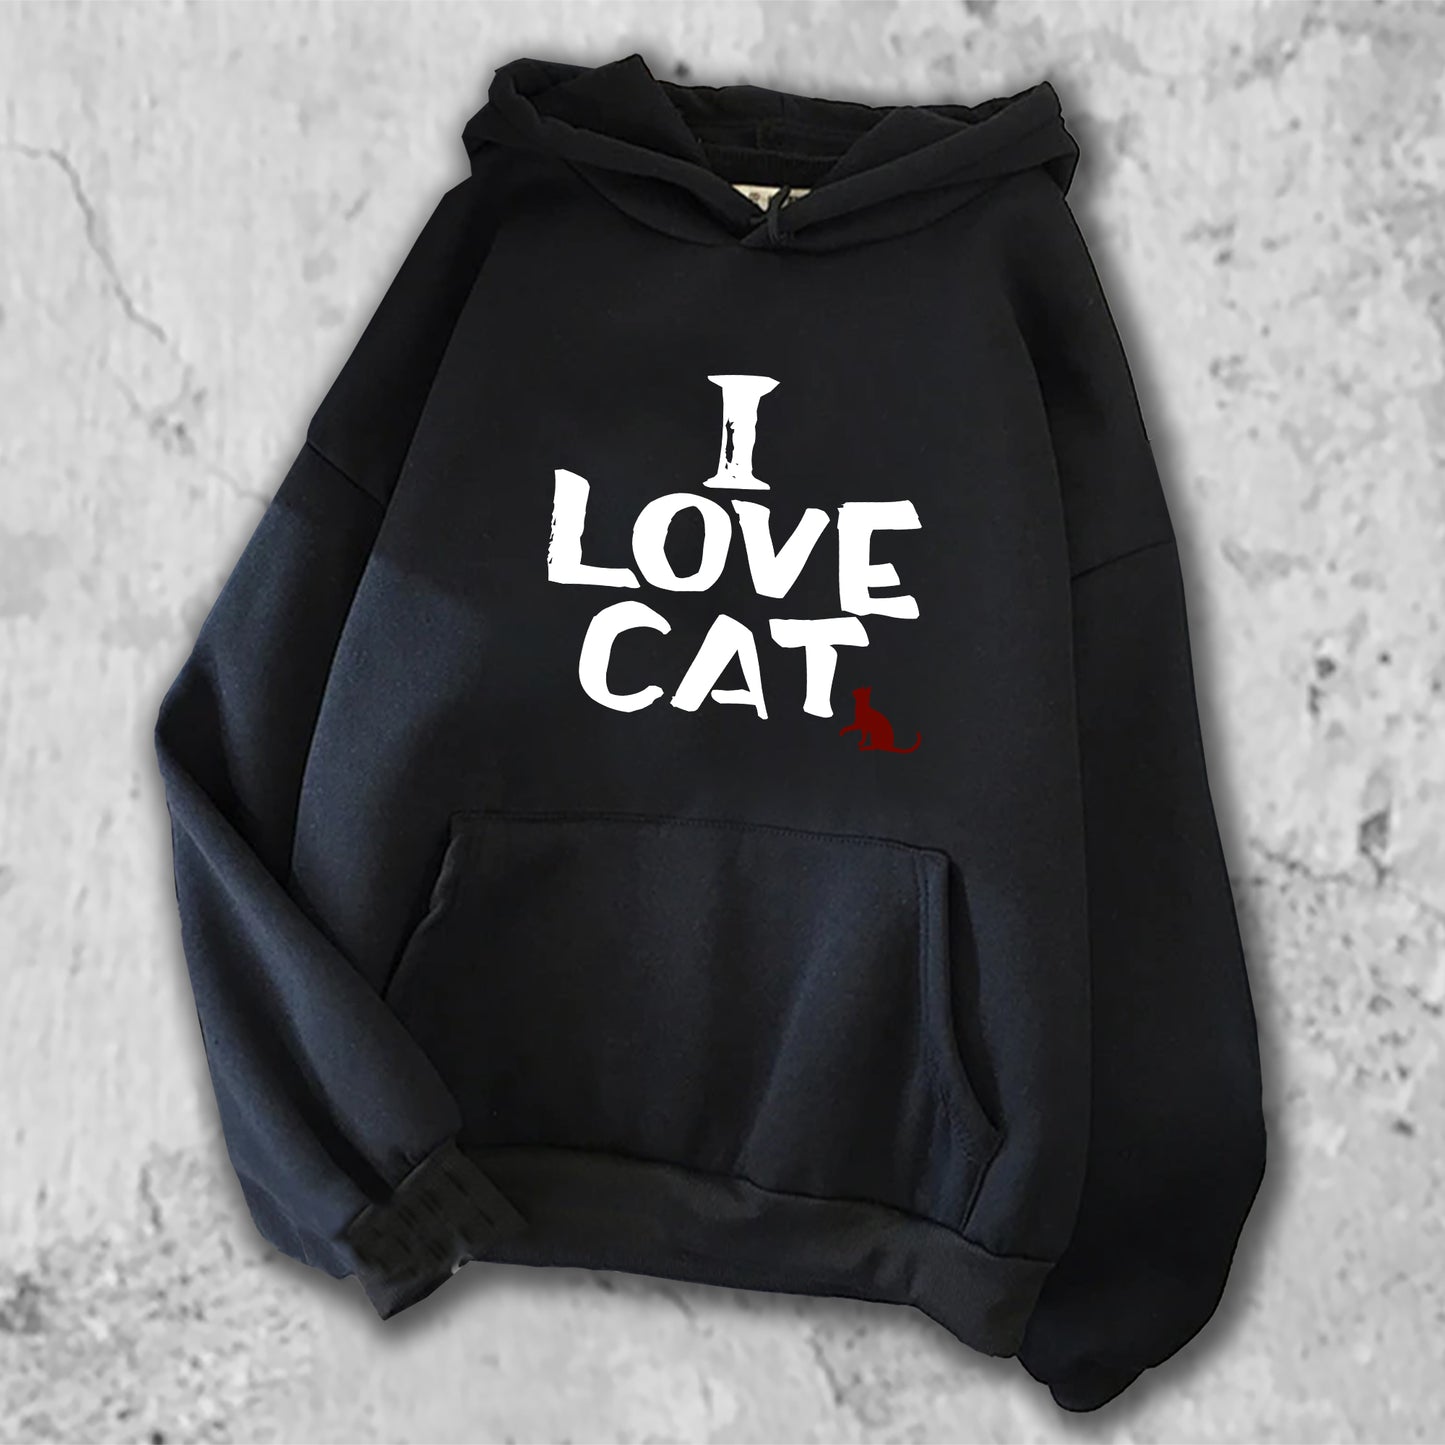 I LOVE CAT パーカー black